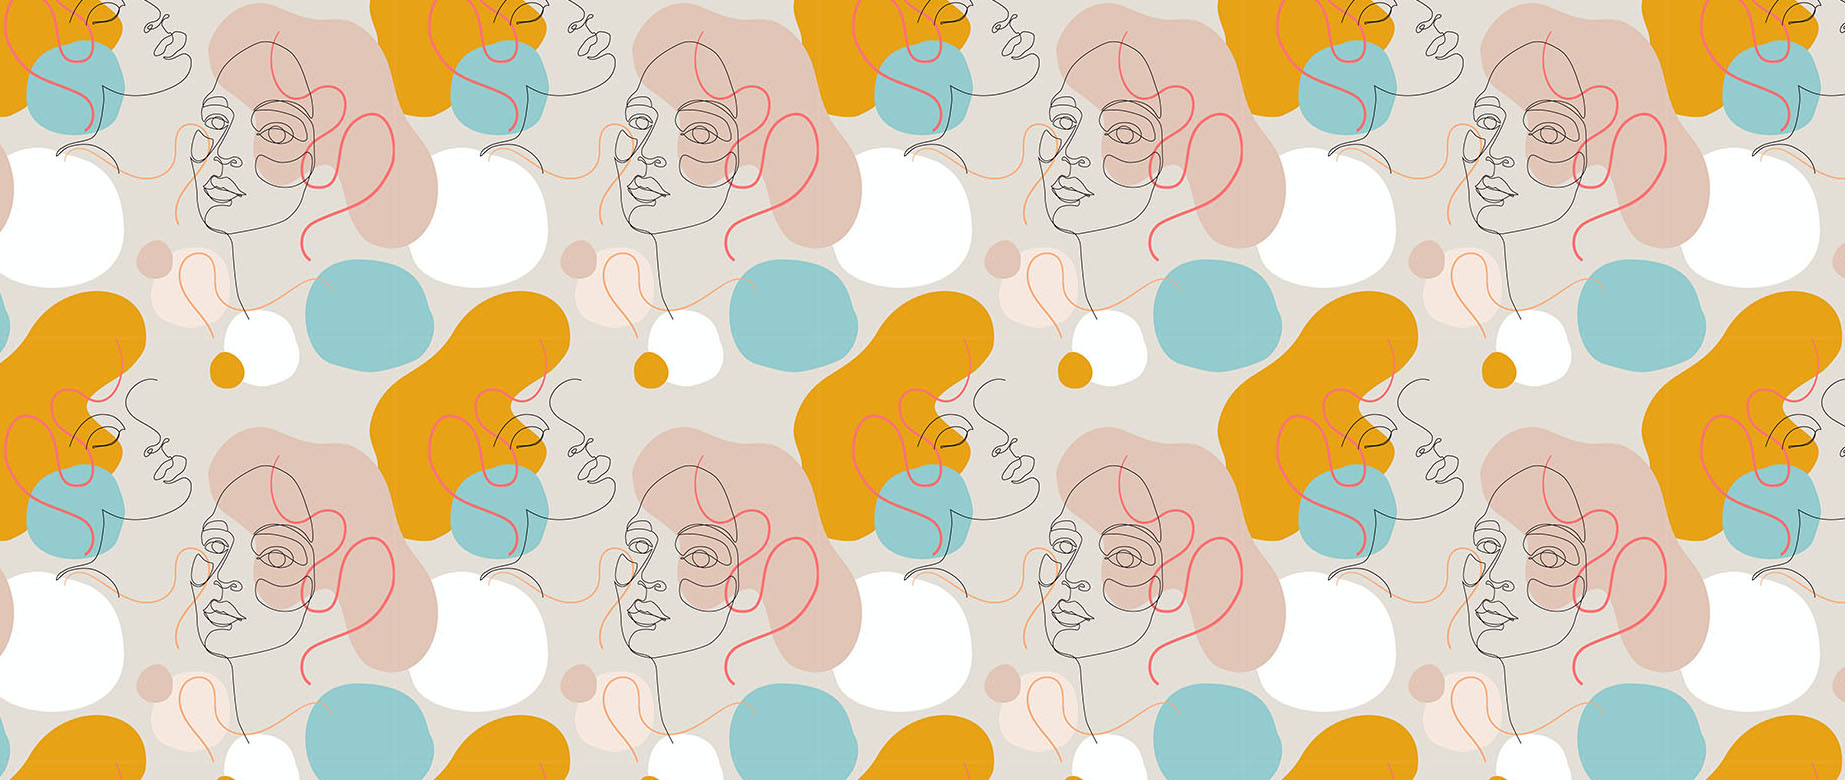 modern-line-drawn-women-face-wallpaper-seamless-repeat-view